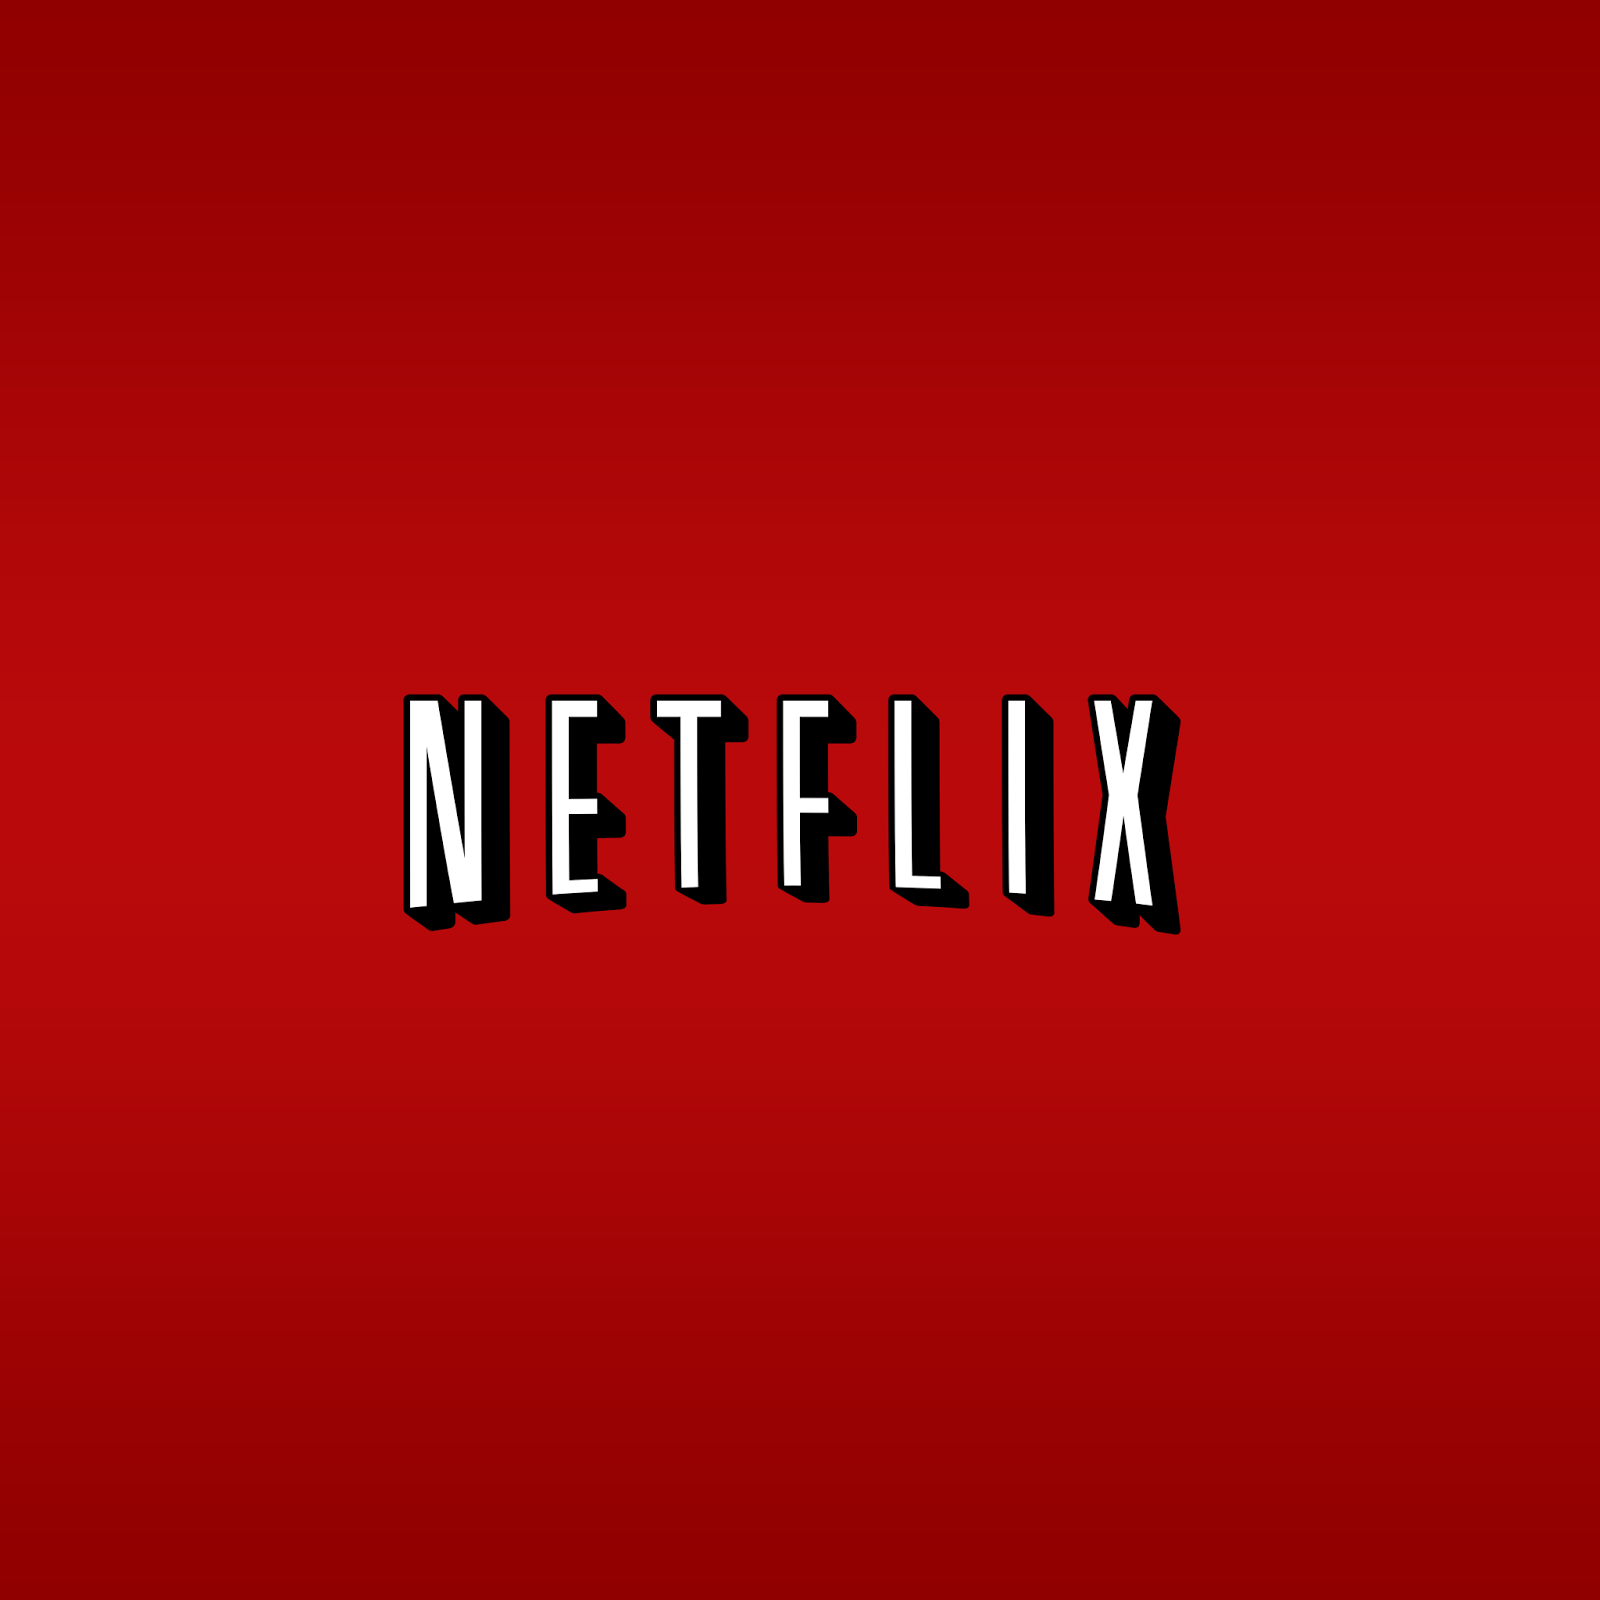 Lifestyle | The Netflix Tag